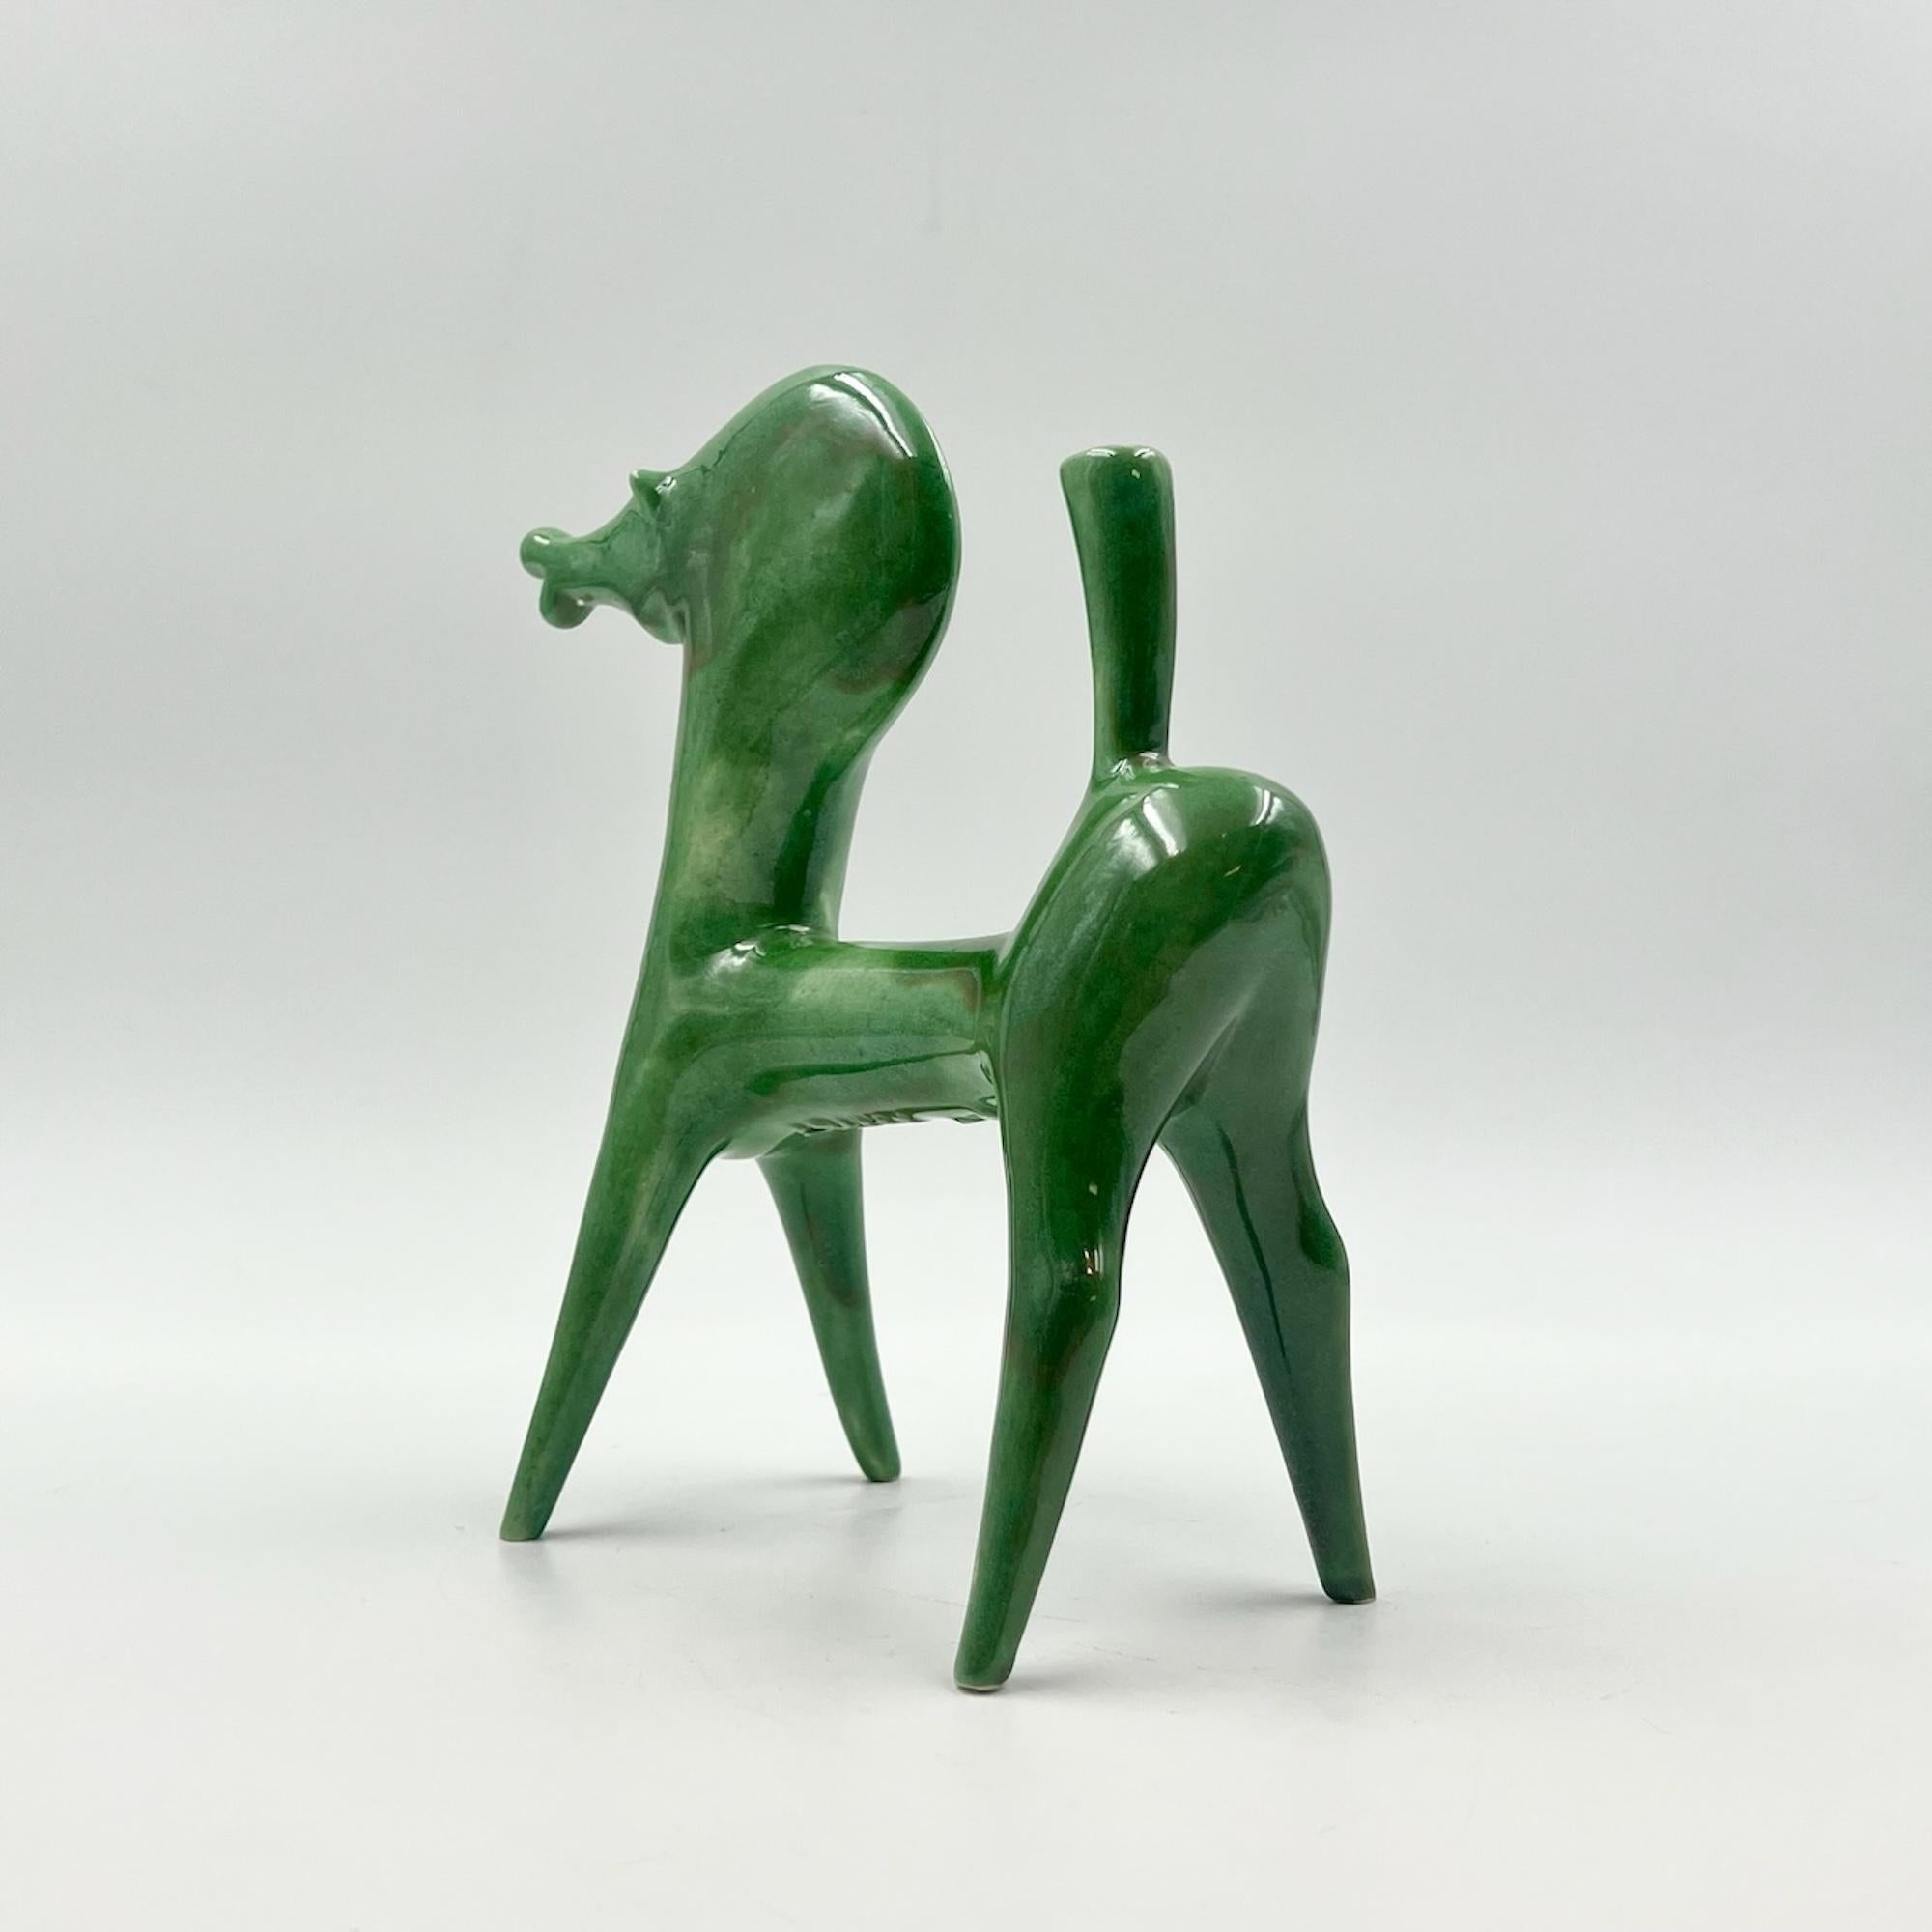 Green Ceramic Horse Figurine - 1970s Handmade Sculpture by Roberto Rigon Italy  In Good Condition For Sale In San Benedetto Del Tronto, IT